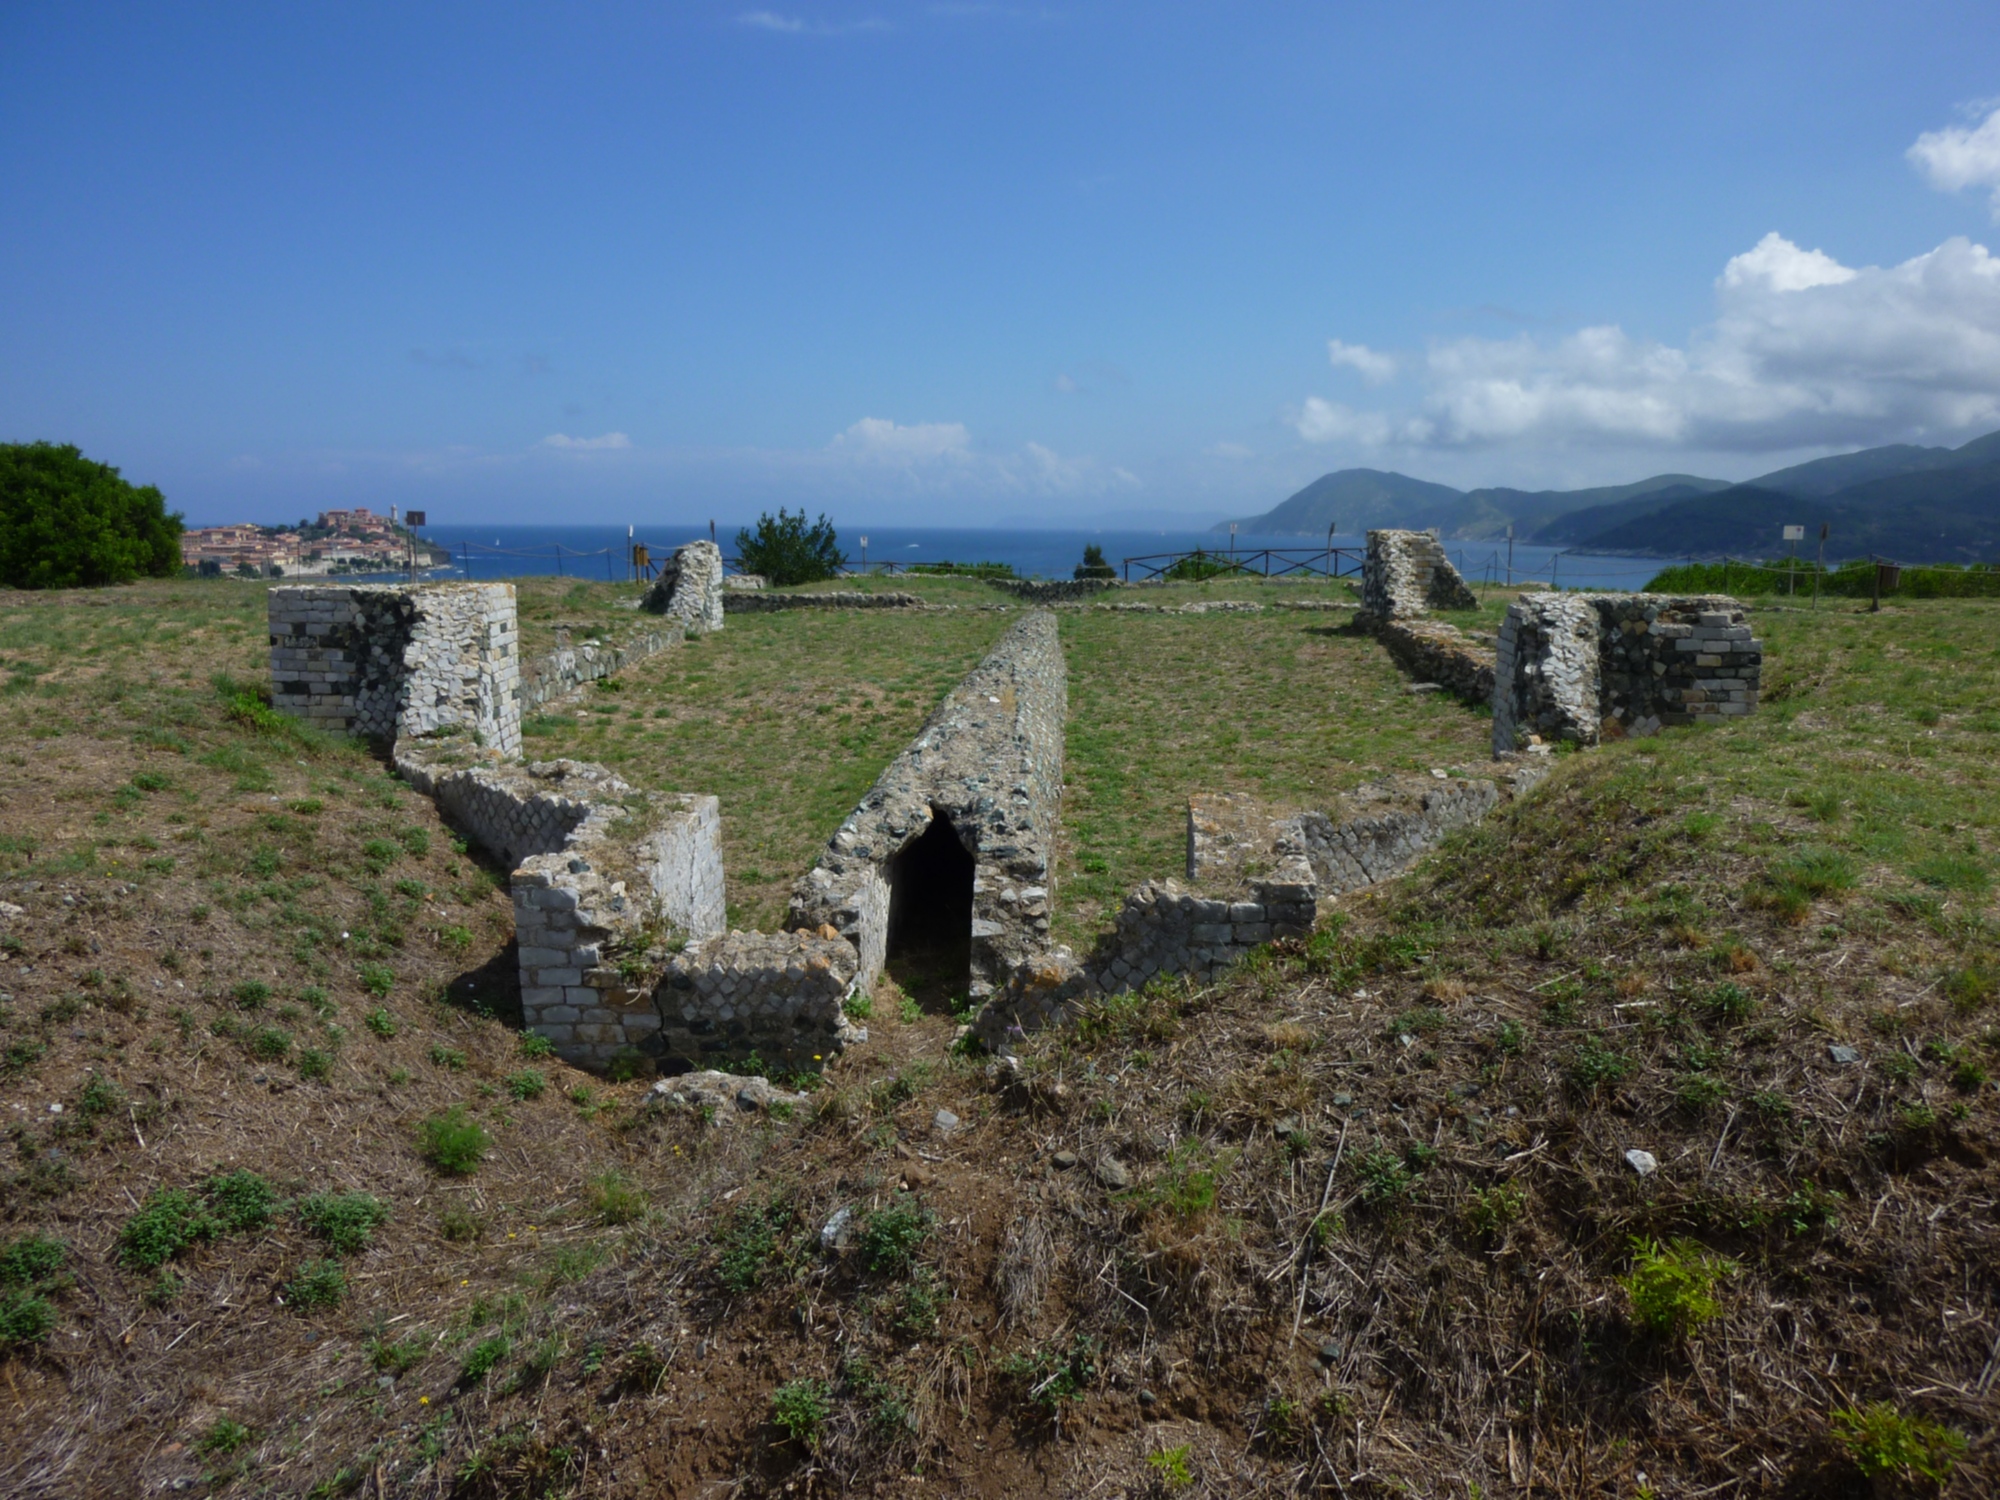 Villa romana delle Grotte, Elba